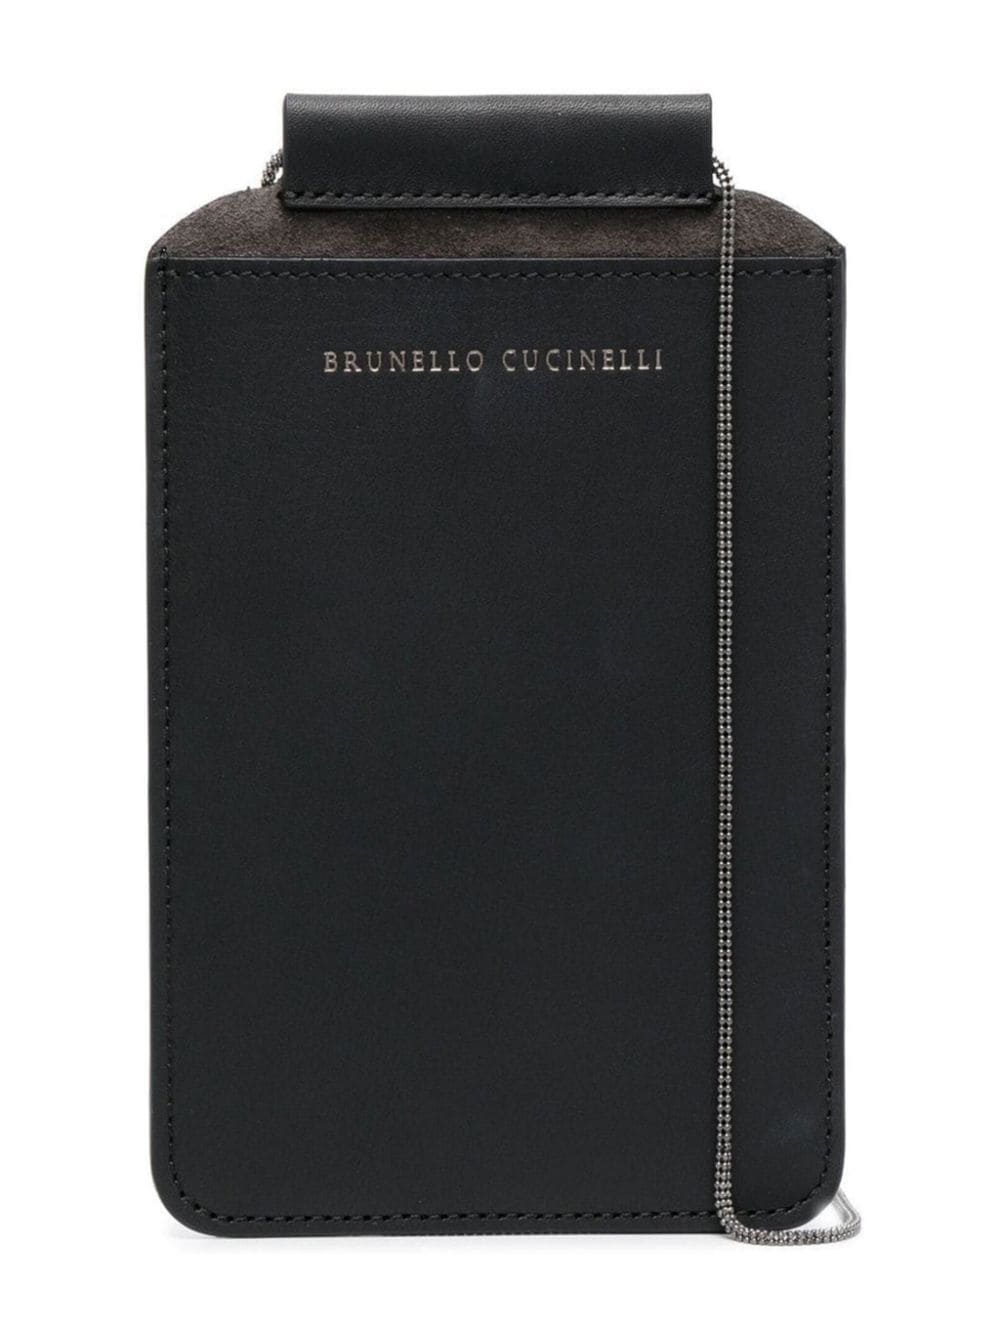 Brunello Cucinelli Monili-chain crossbody phone case - Black von Brunello Cucinelli